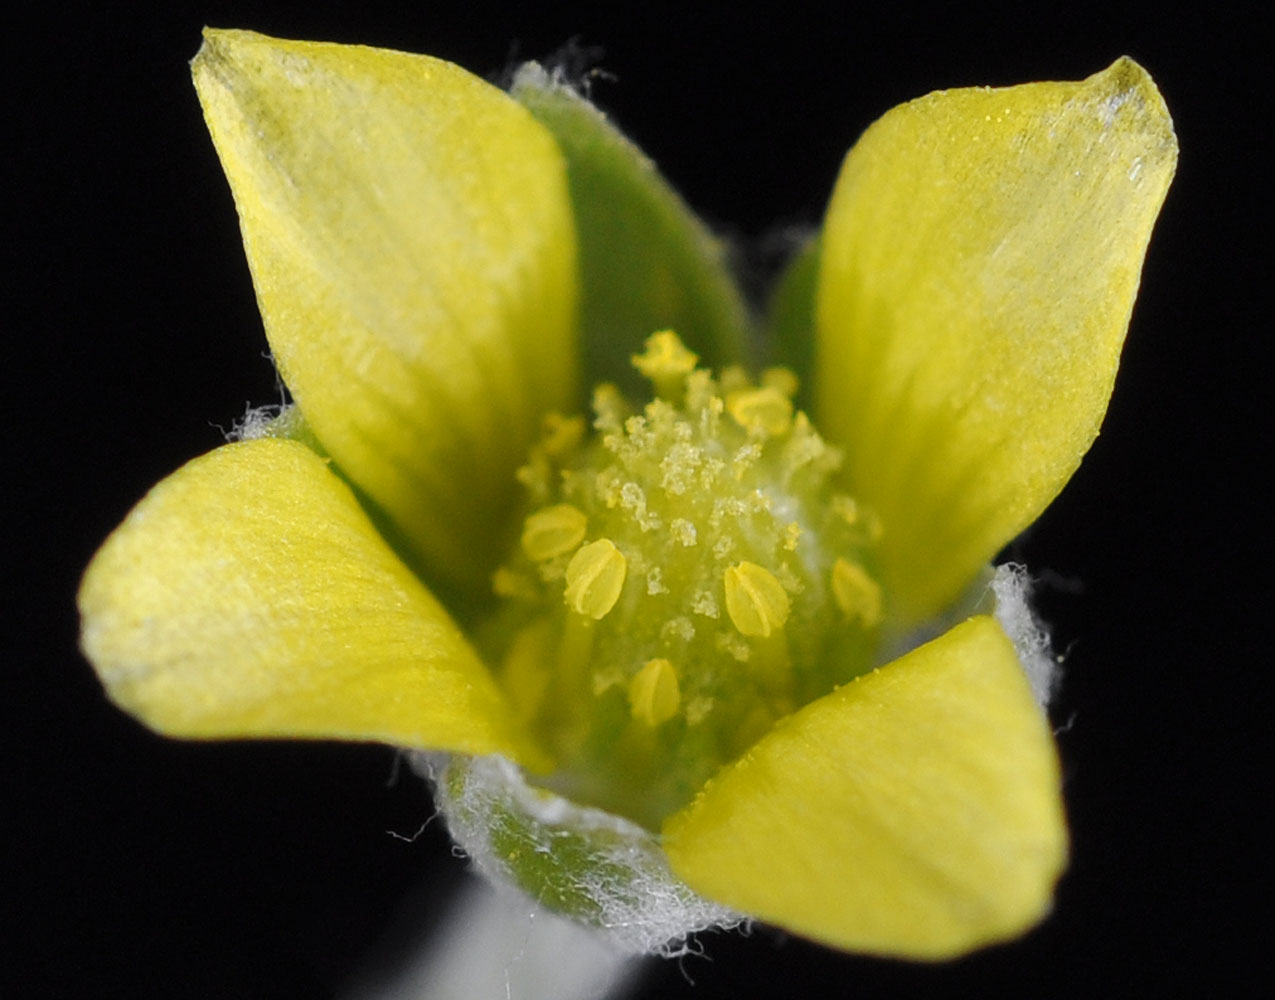 Flora of Eastern Washington Image: Ceratocephala testiculata